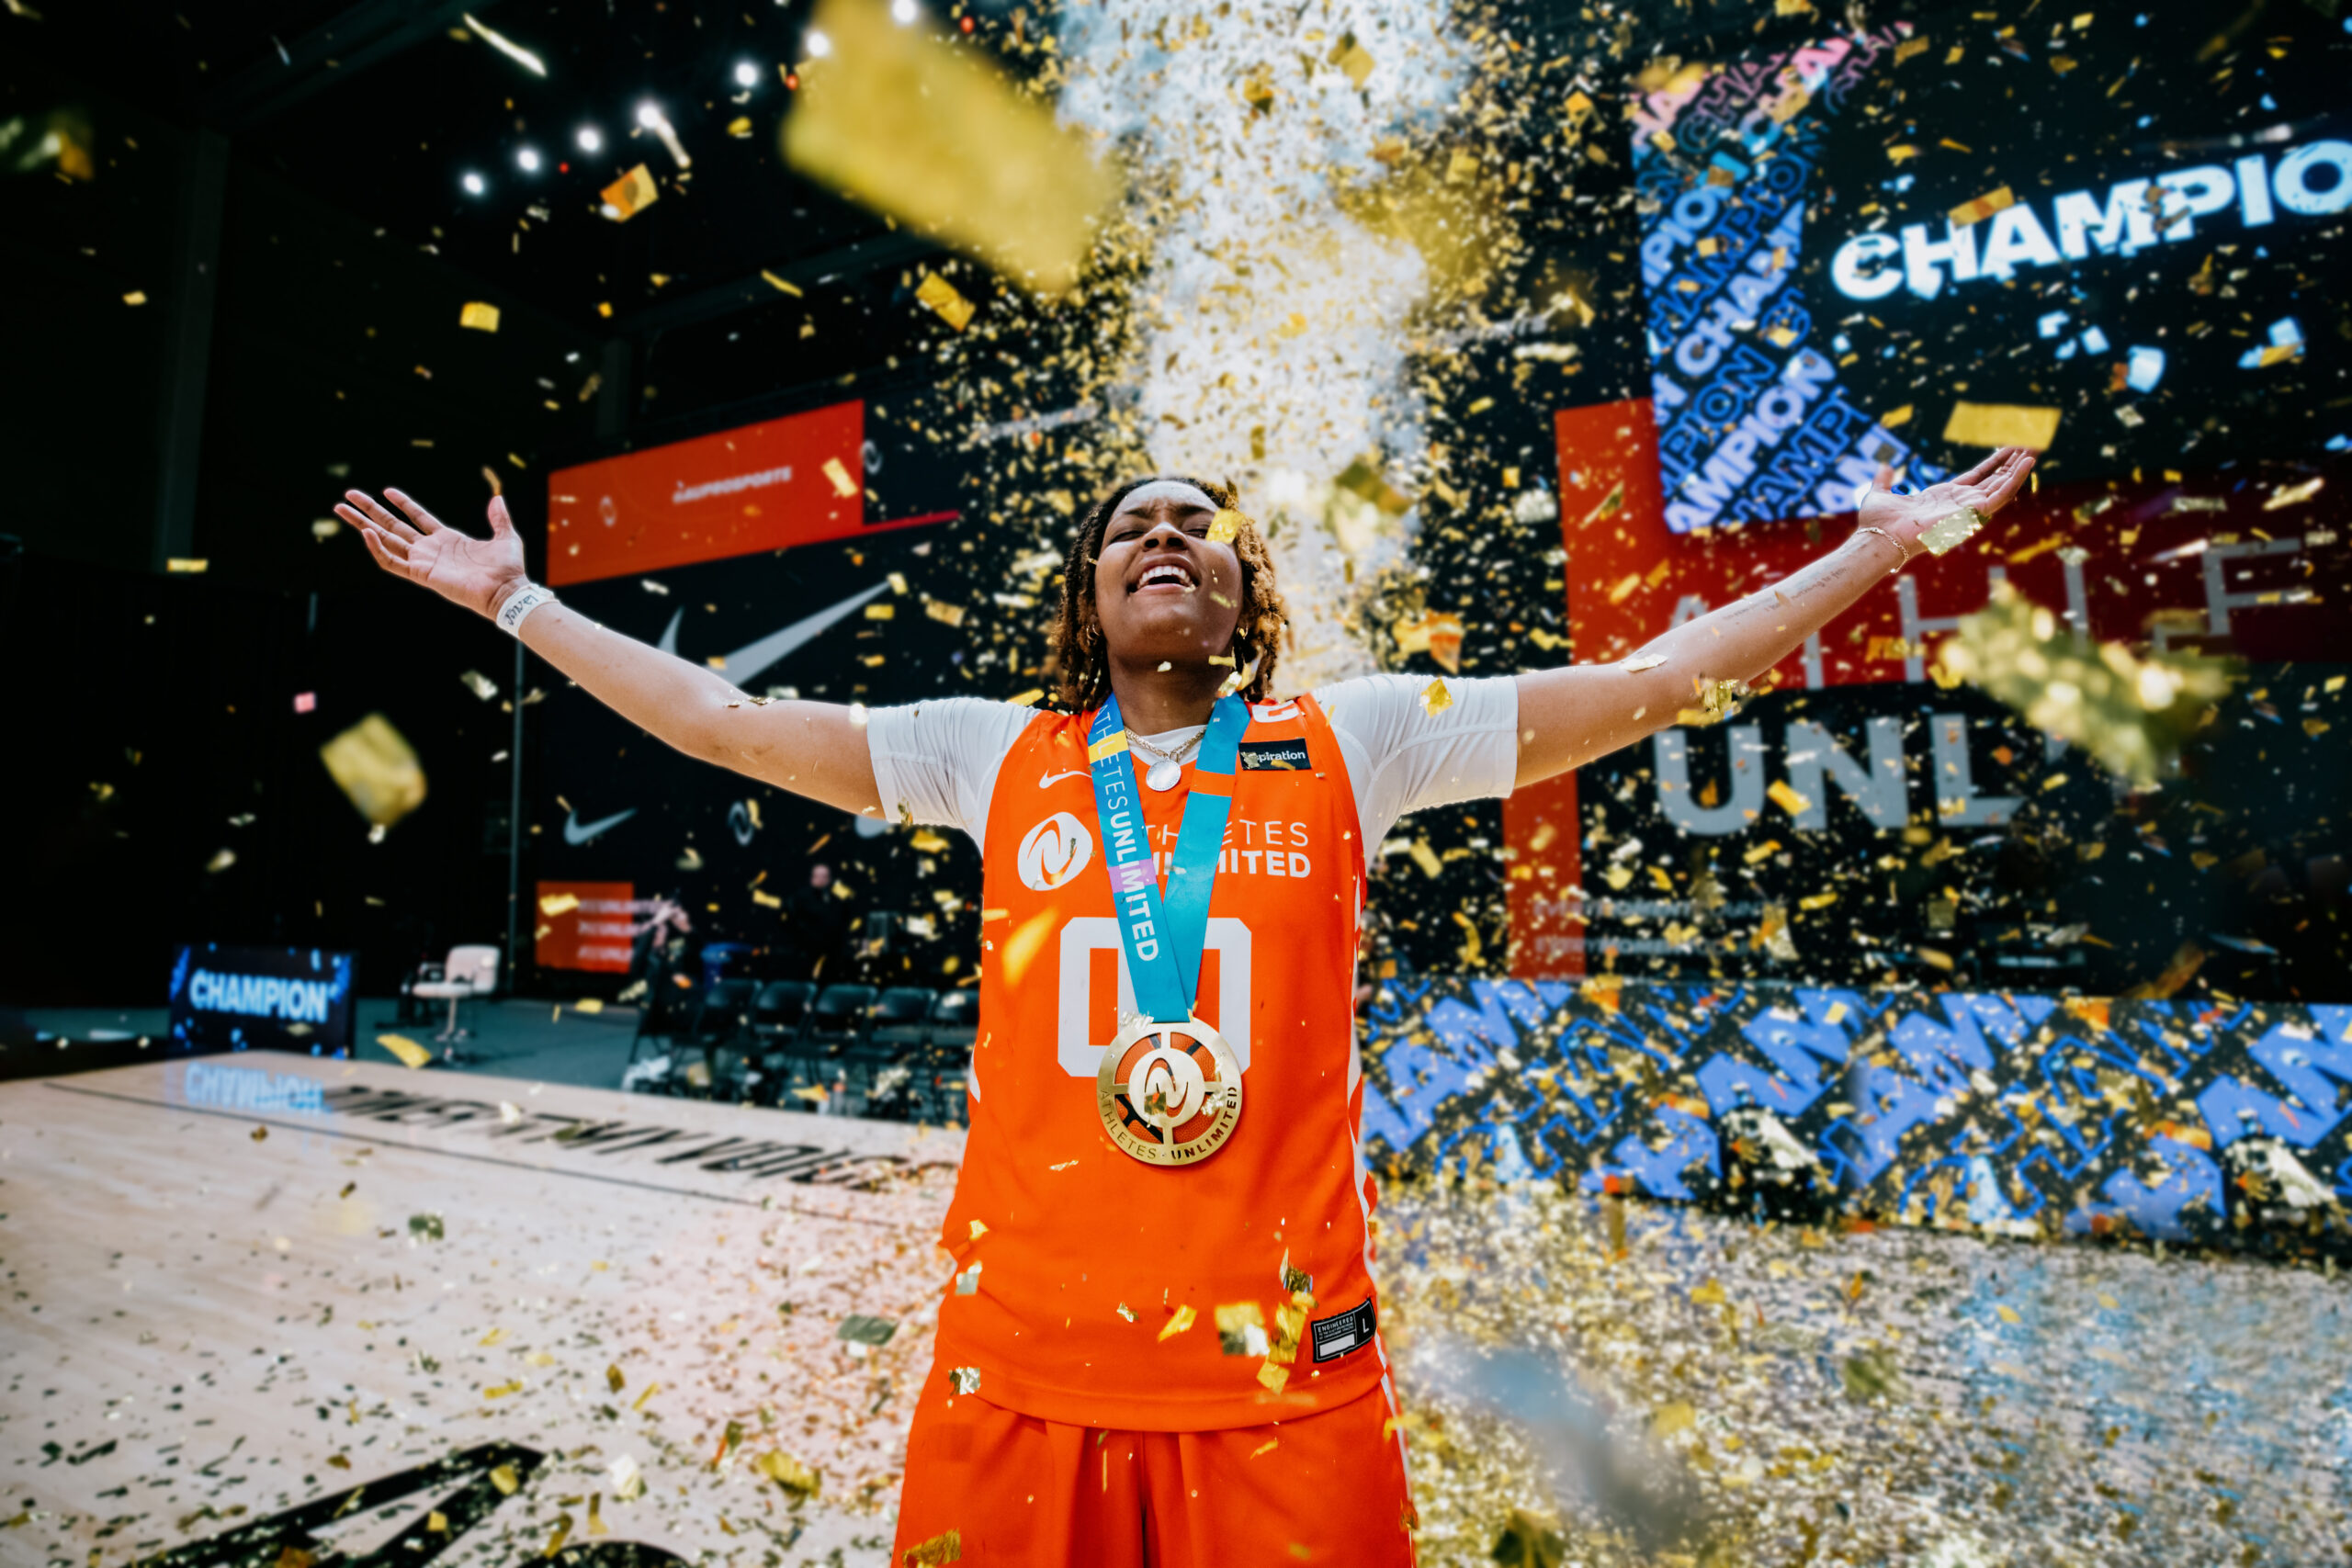 NaLyssa Smith celebrates her Championship surround by gold confetti.